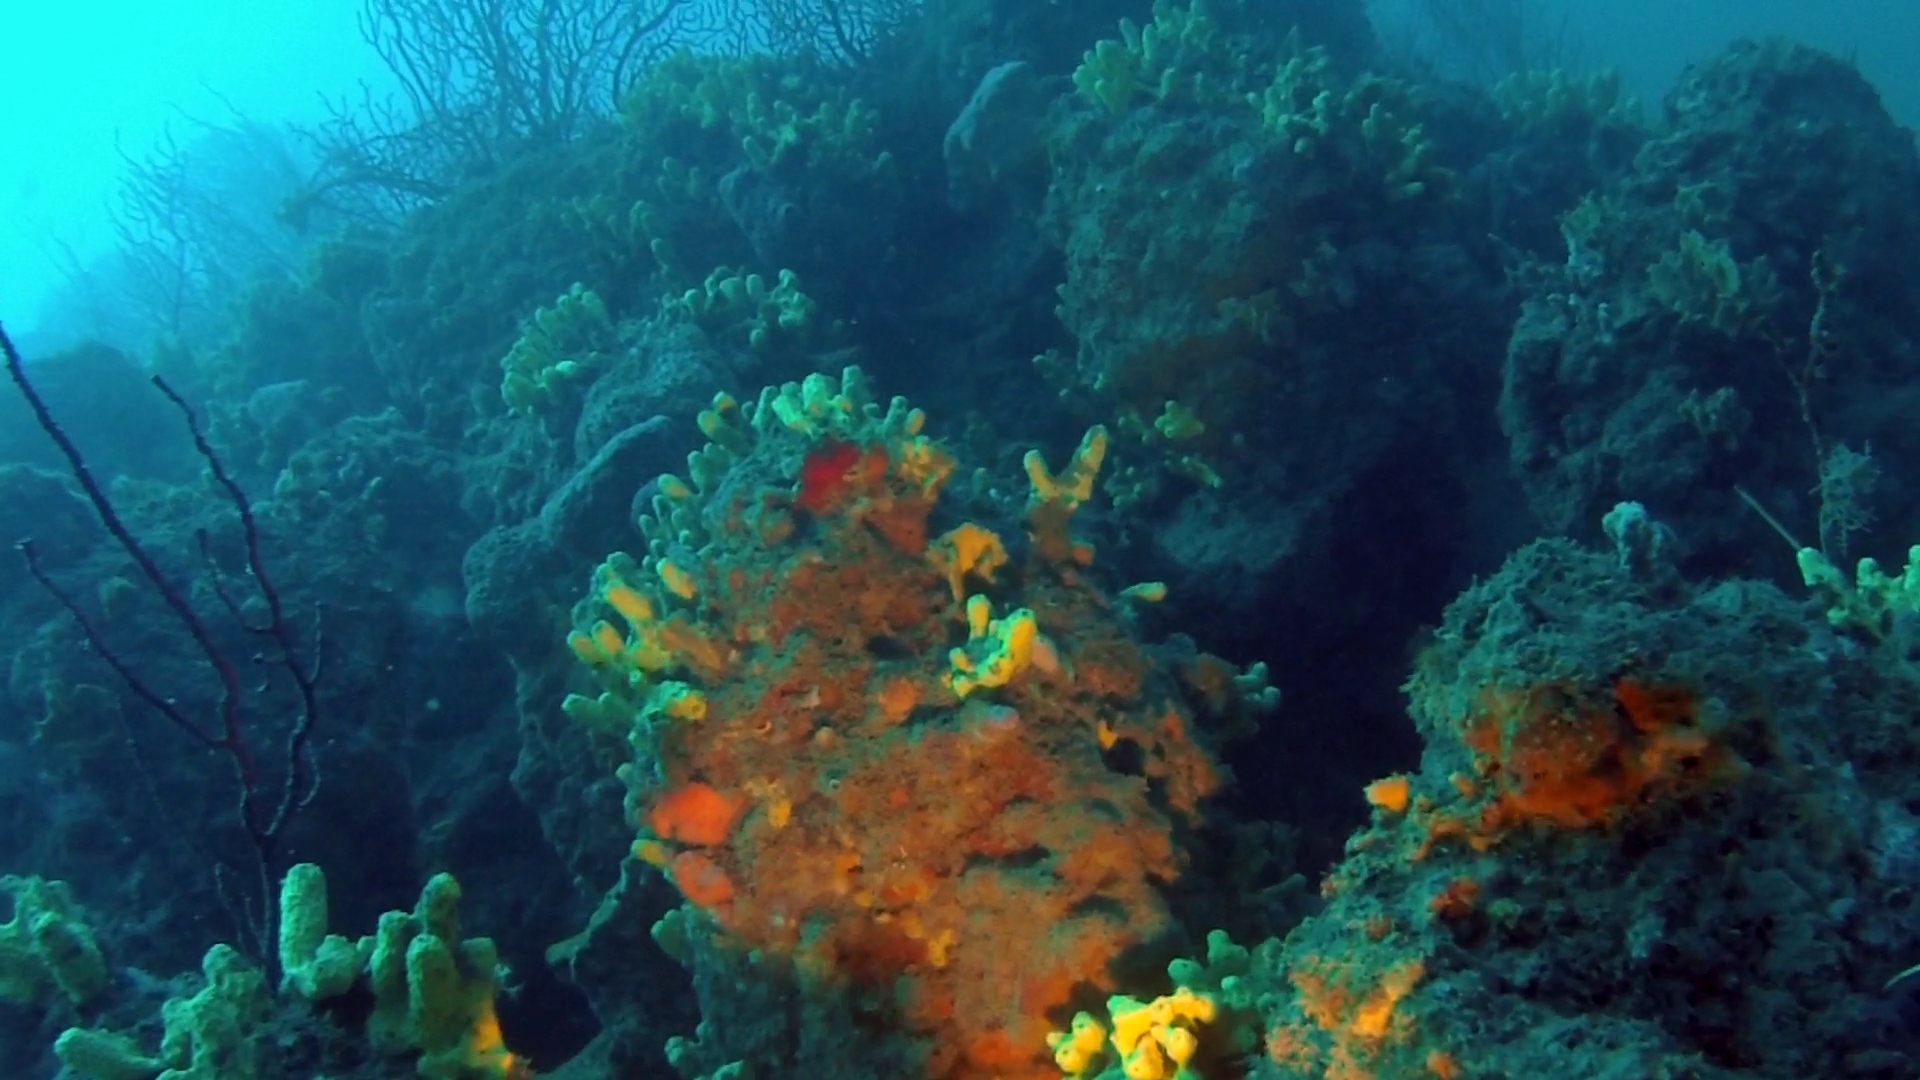 Sponges - Porifera